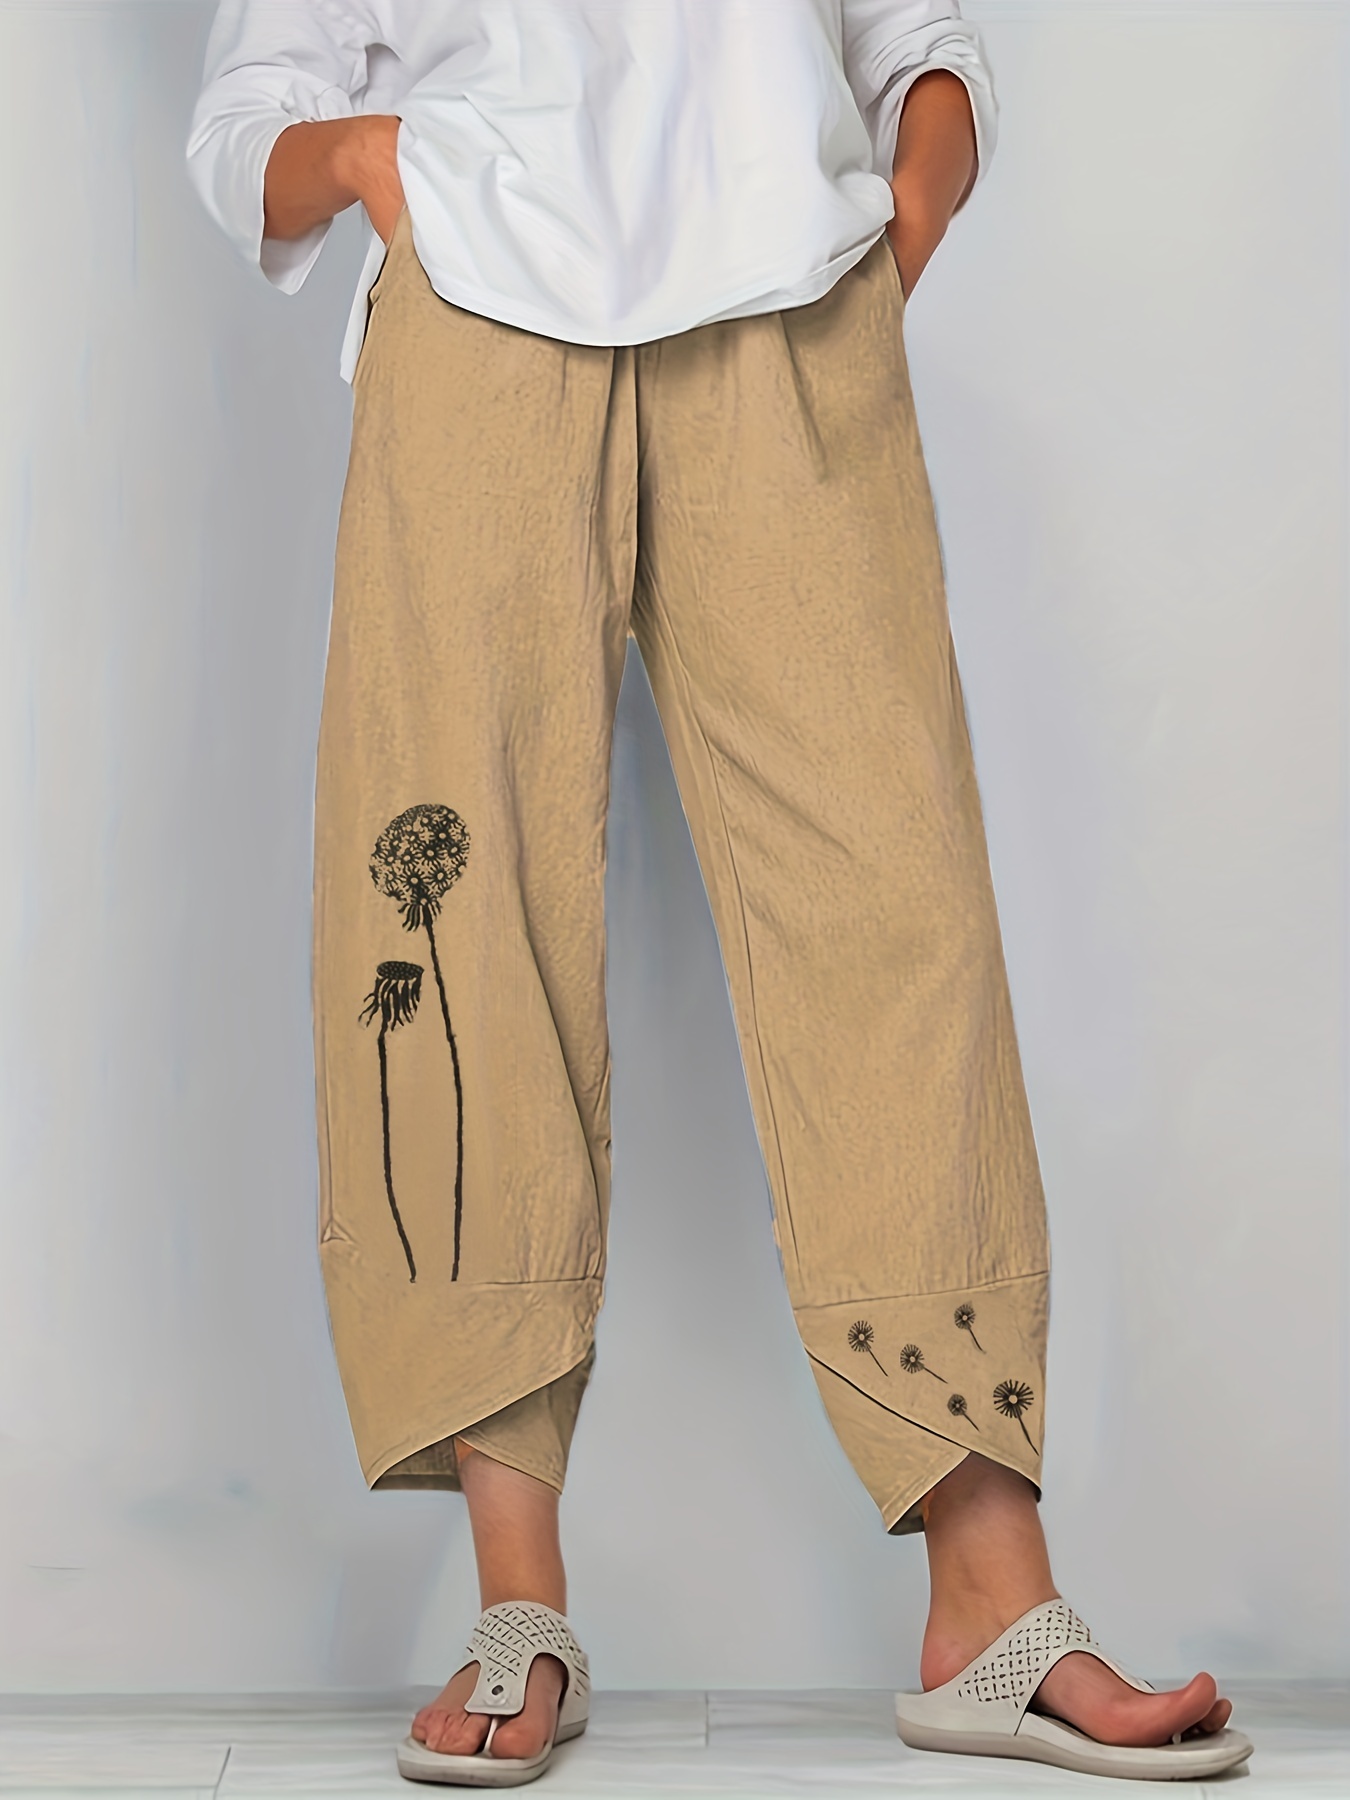 Boho Style High Waist Khaki Cotton Pants for Men